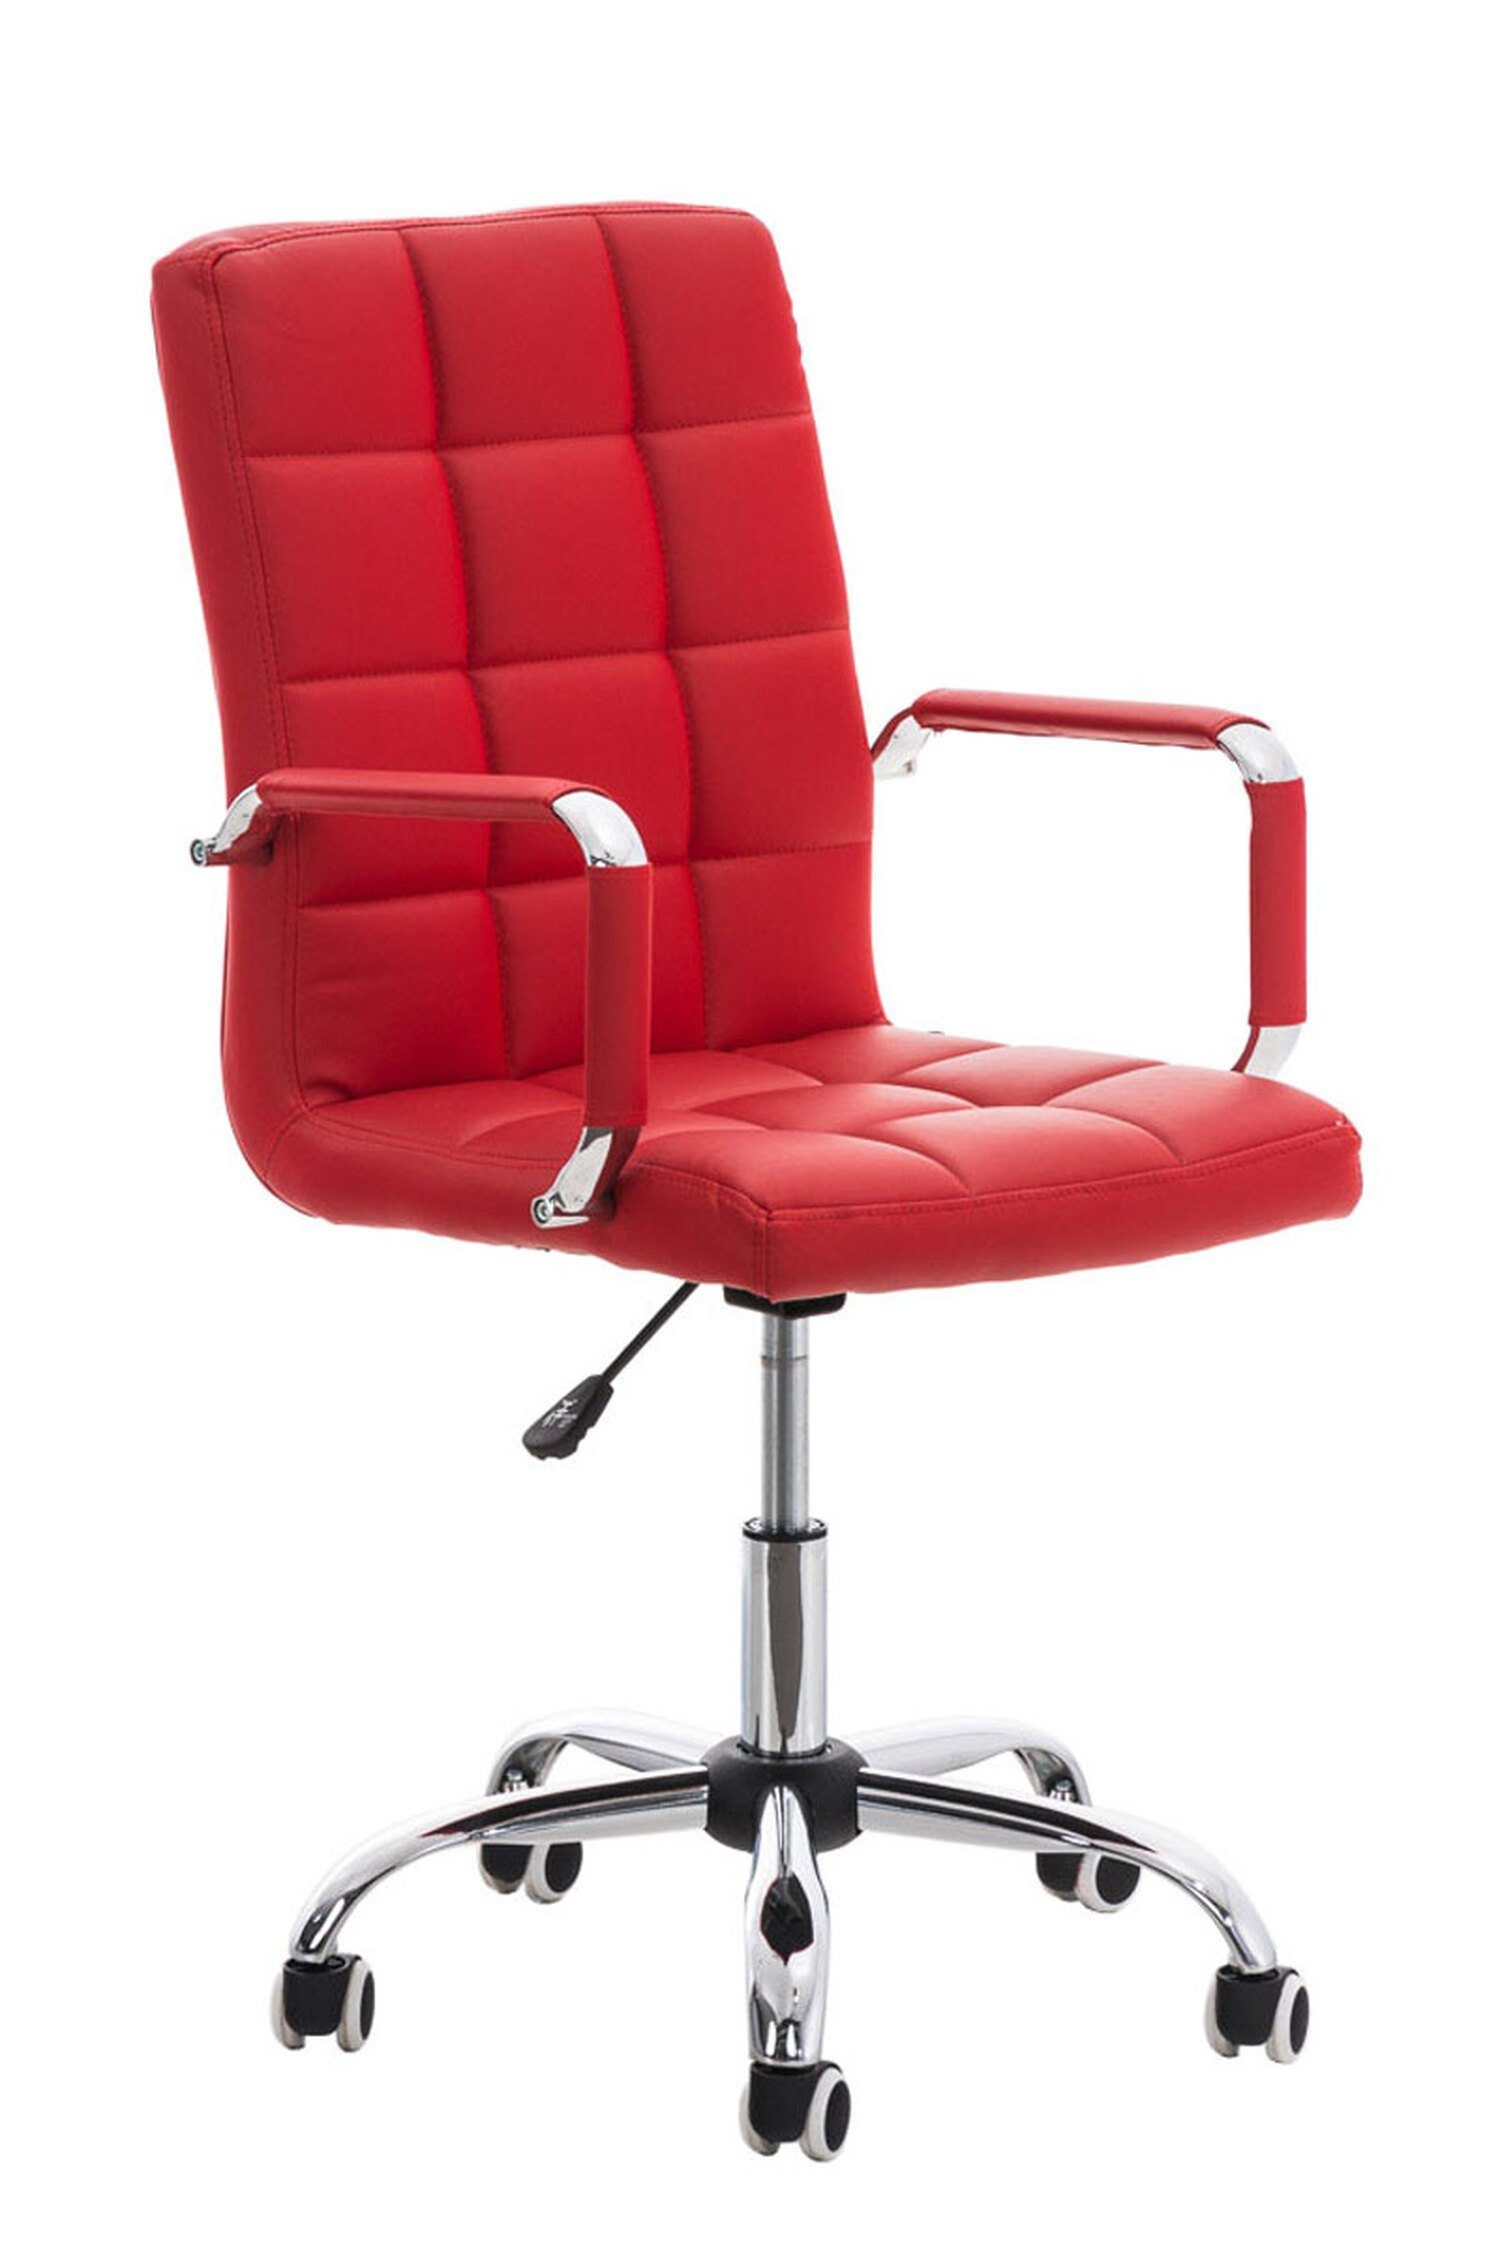 TPFLiving Bürostuhl Deal V2 mit bequemer Rückenlehne (Schreibtischstuhl, Drehstuhl, Konferenzstuhl, Chefsessel), Gestell: Metall chrom - Sitzfläche: Kunstleder rot | Drehstühle